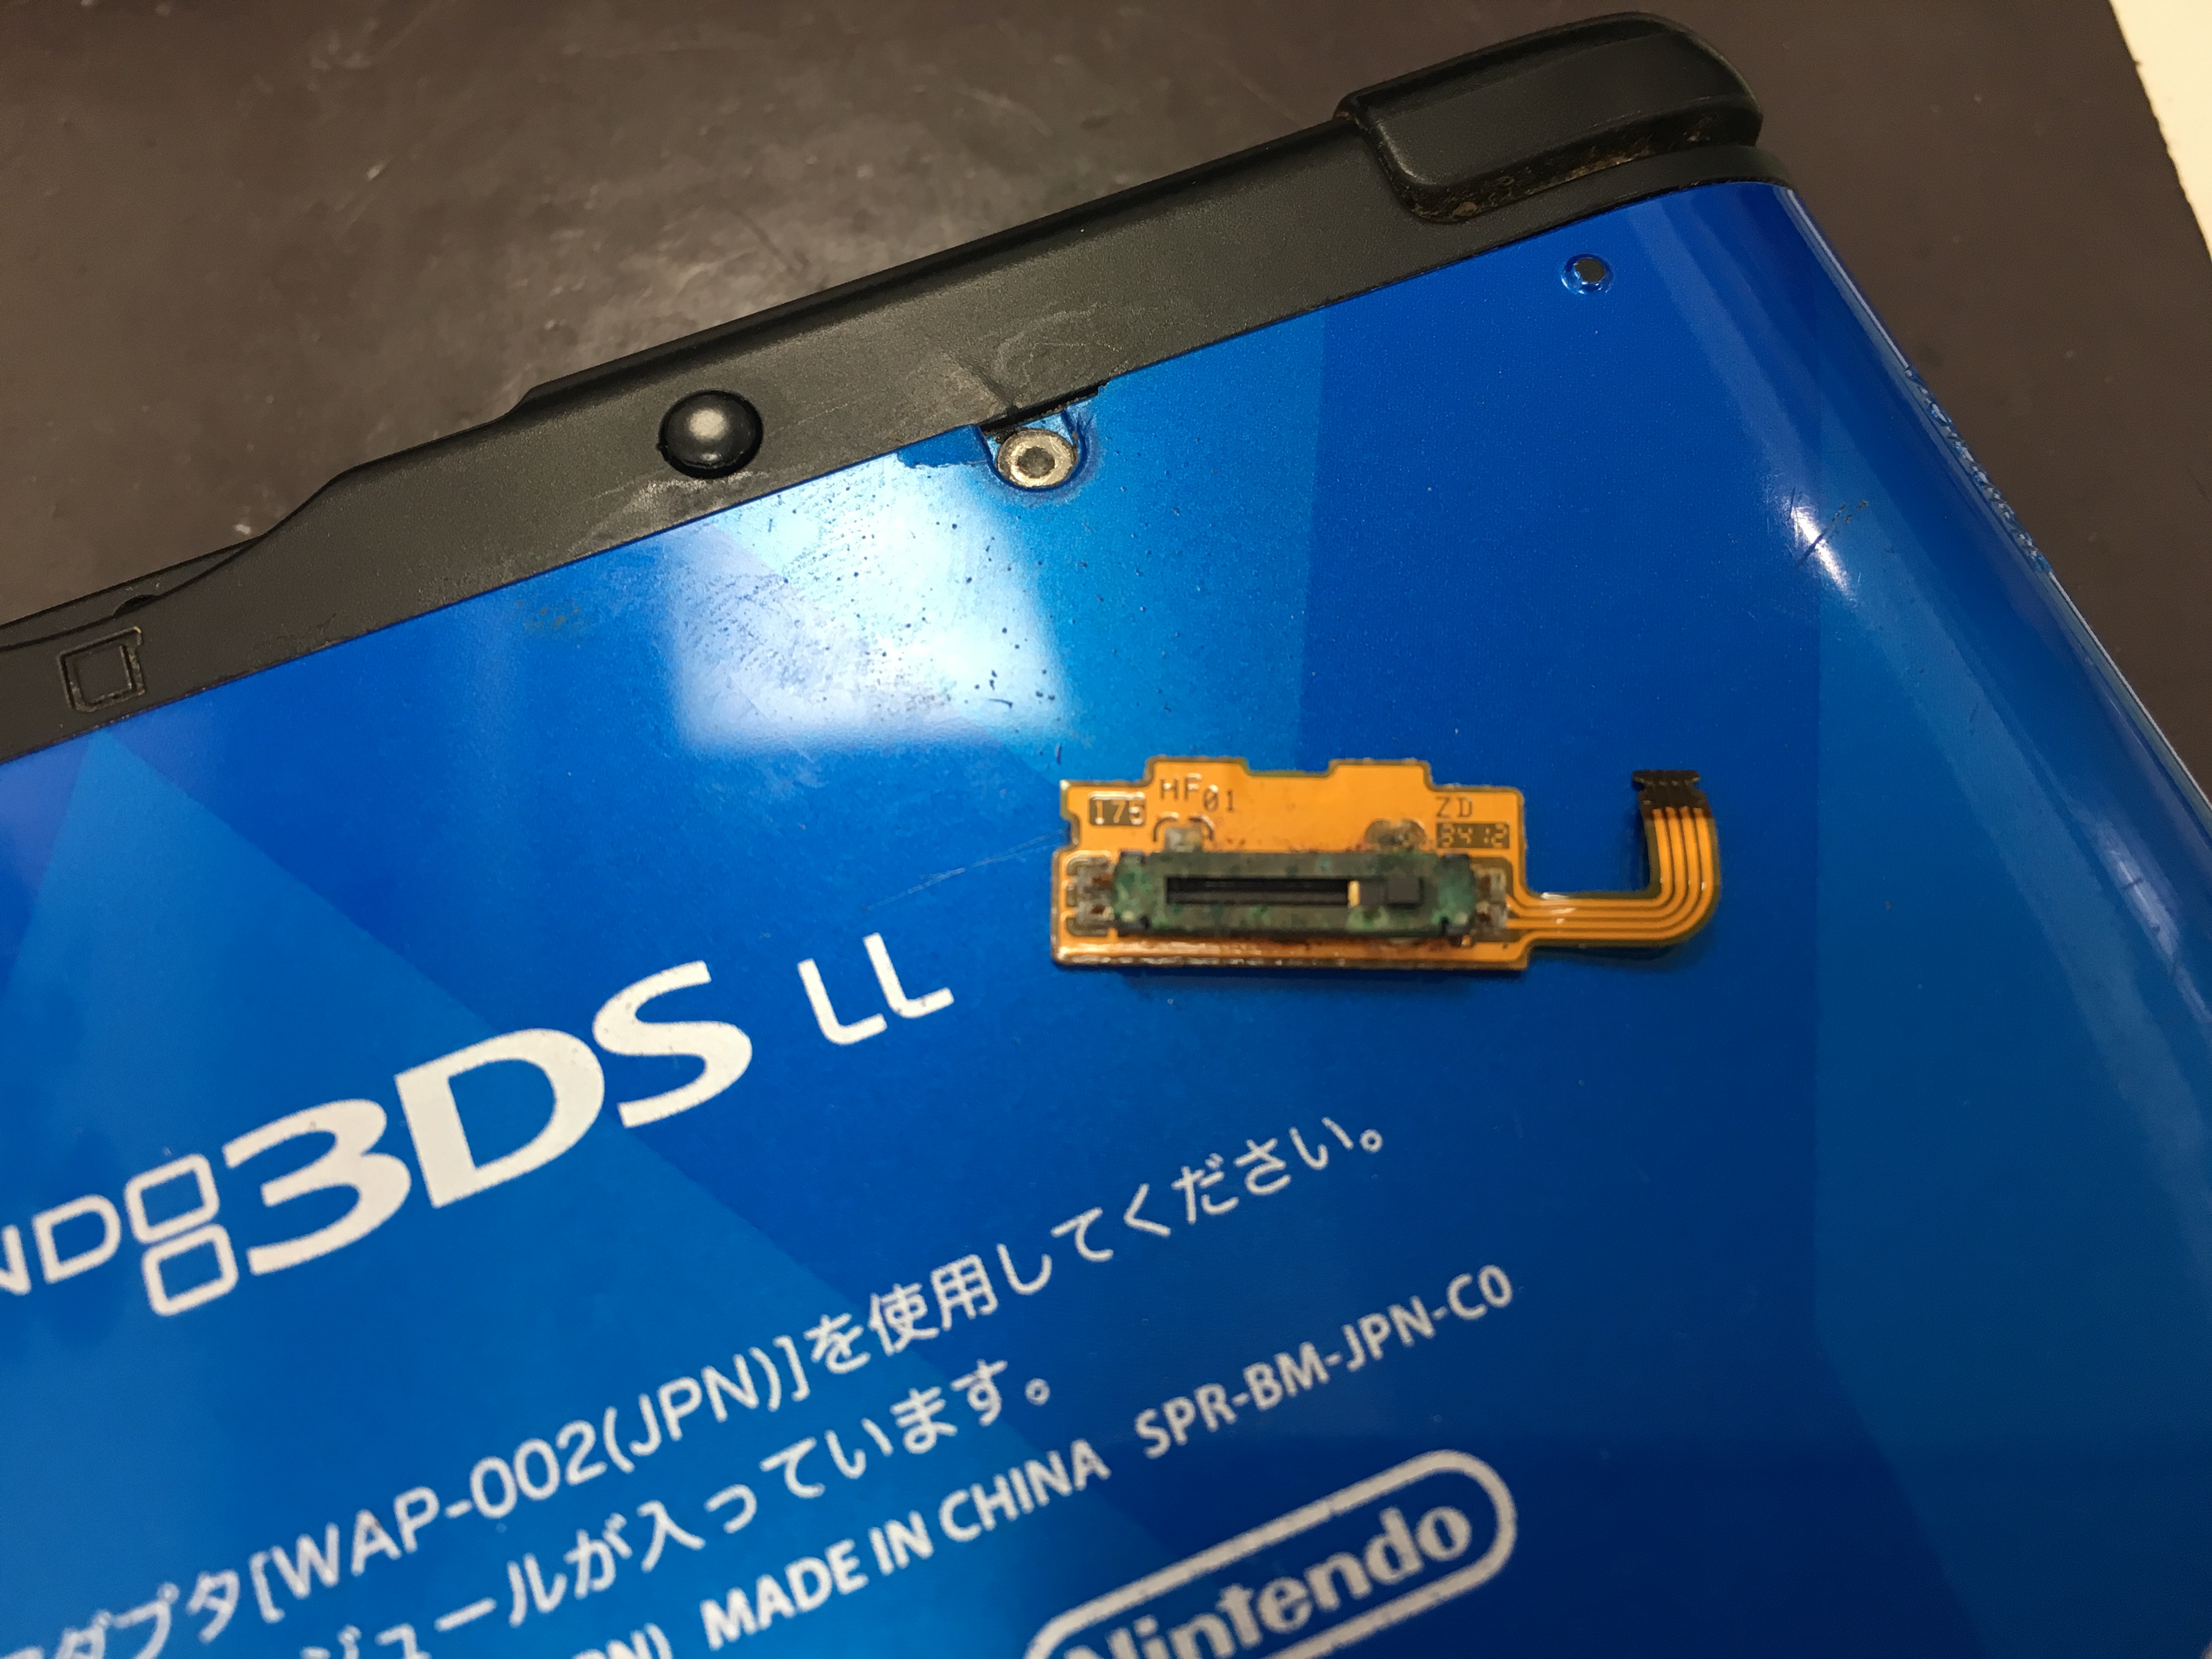 3dsll 音が出なくなった その意外な原因とは Nintendo3ds Switch Psp 修理のゲームホスピタル Nintendo3ds ニンテンドーds Psp Switch 修理